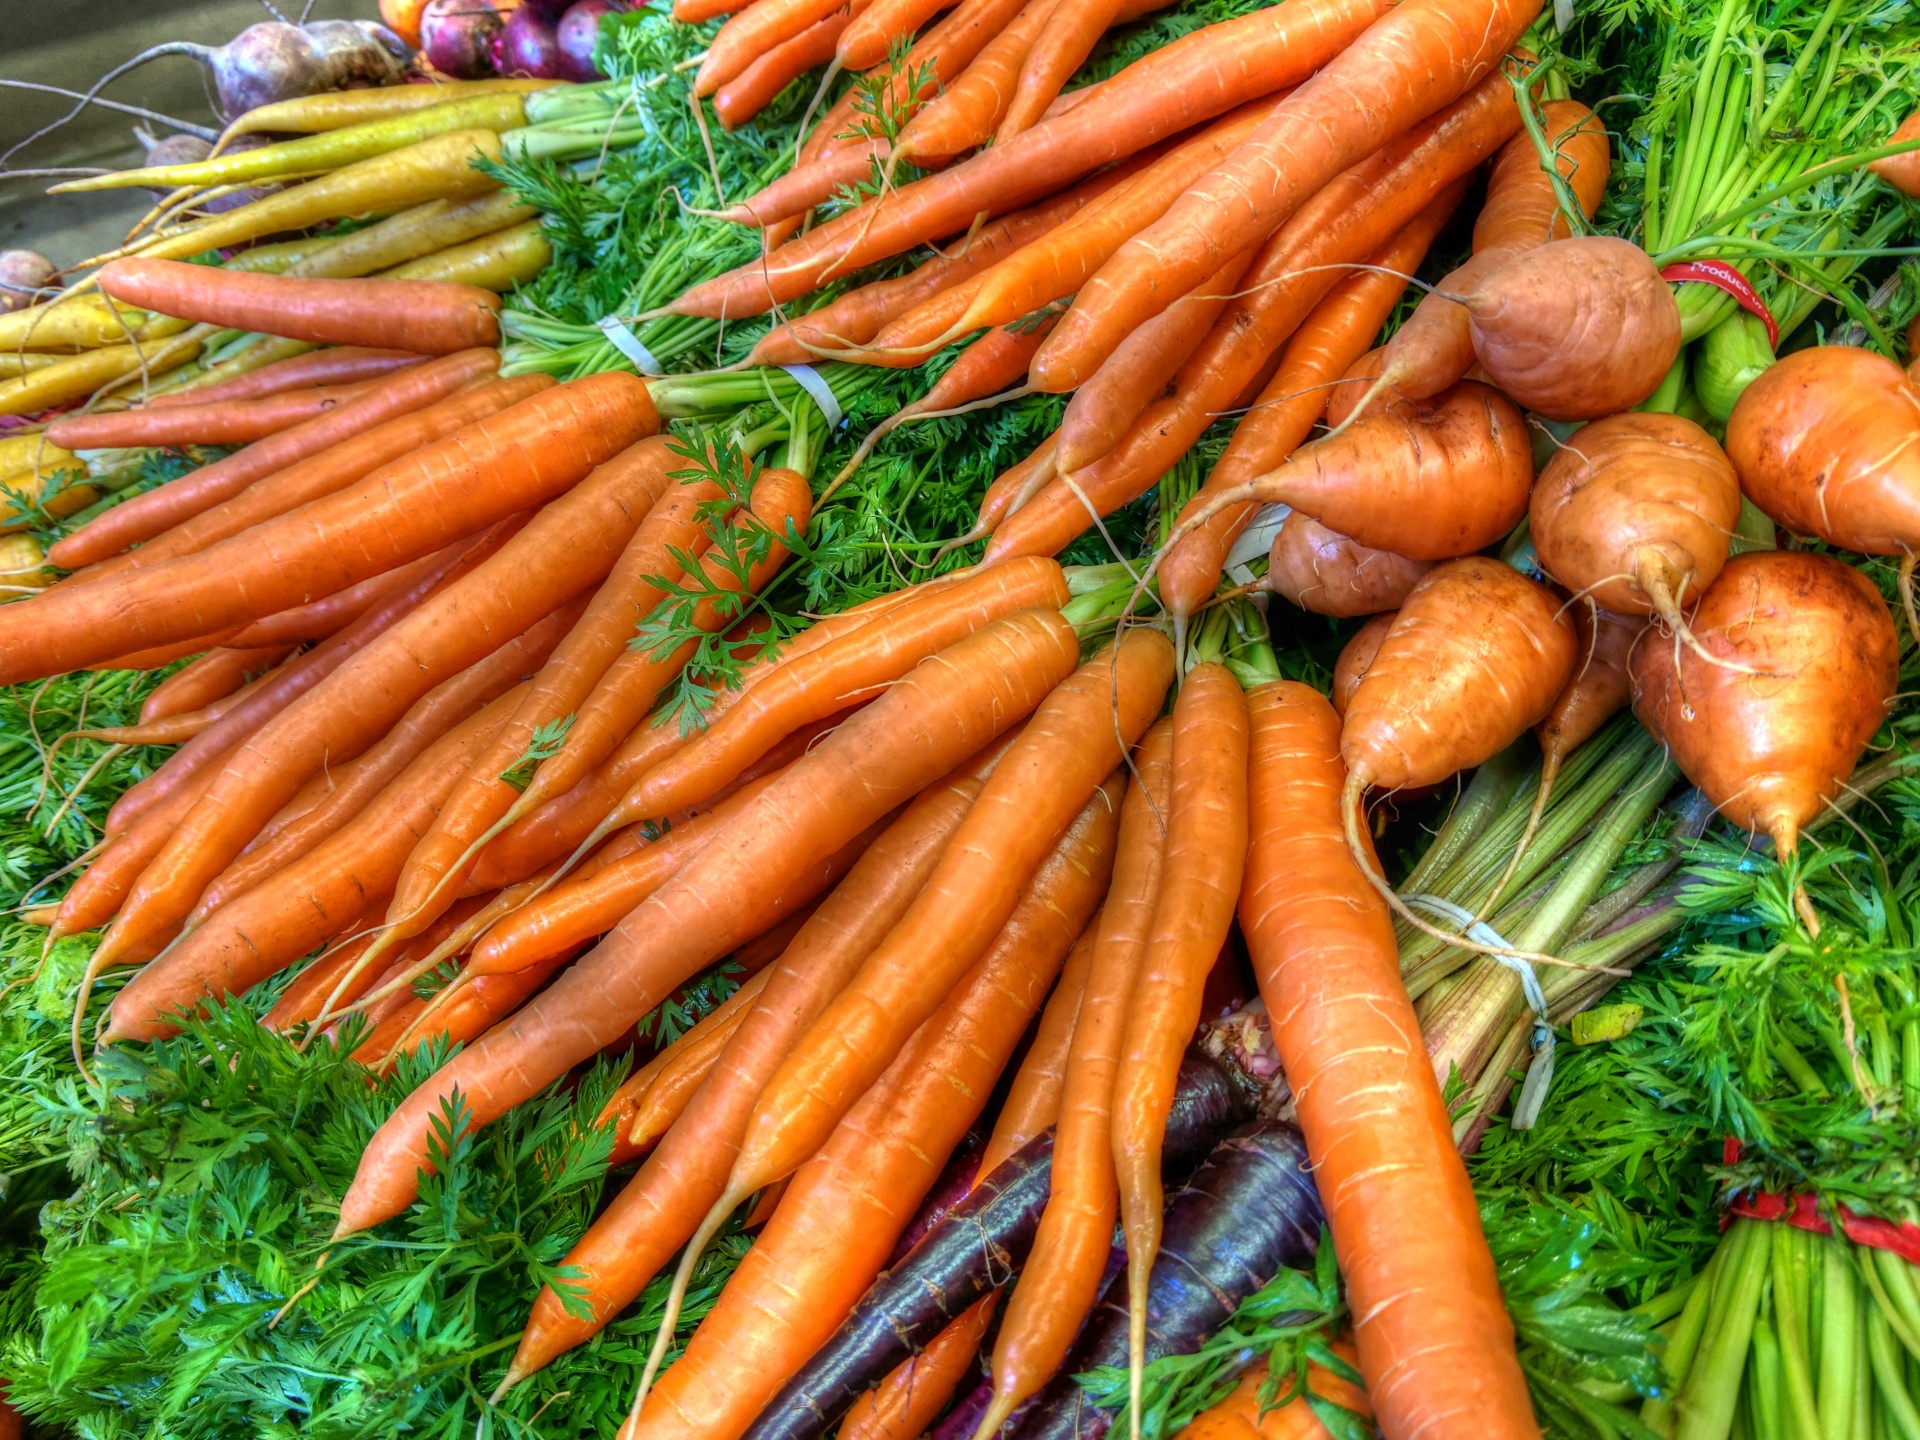 Download free photo of Carrot,人参,vegetable,vegan,health - from needpix.com